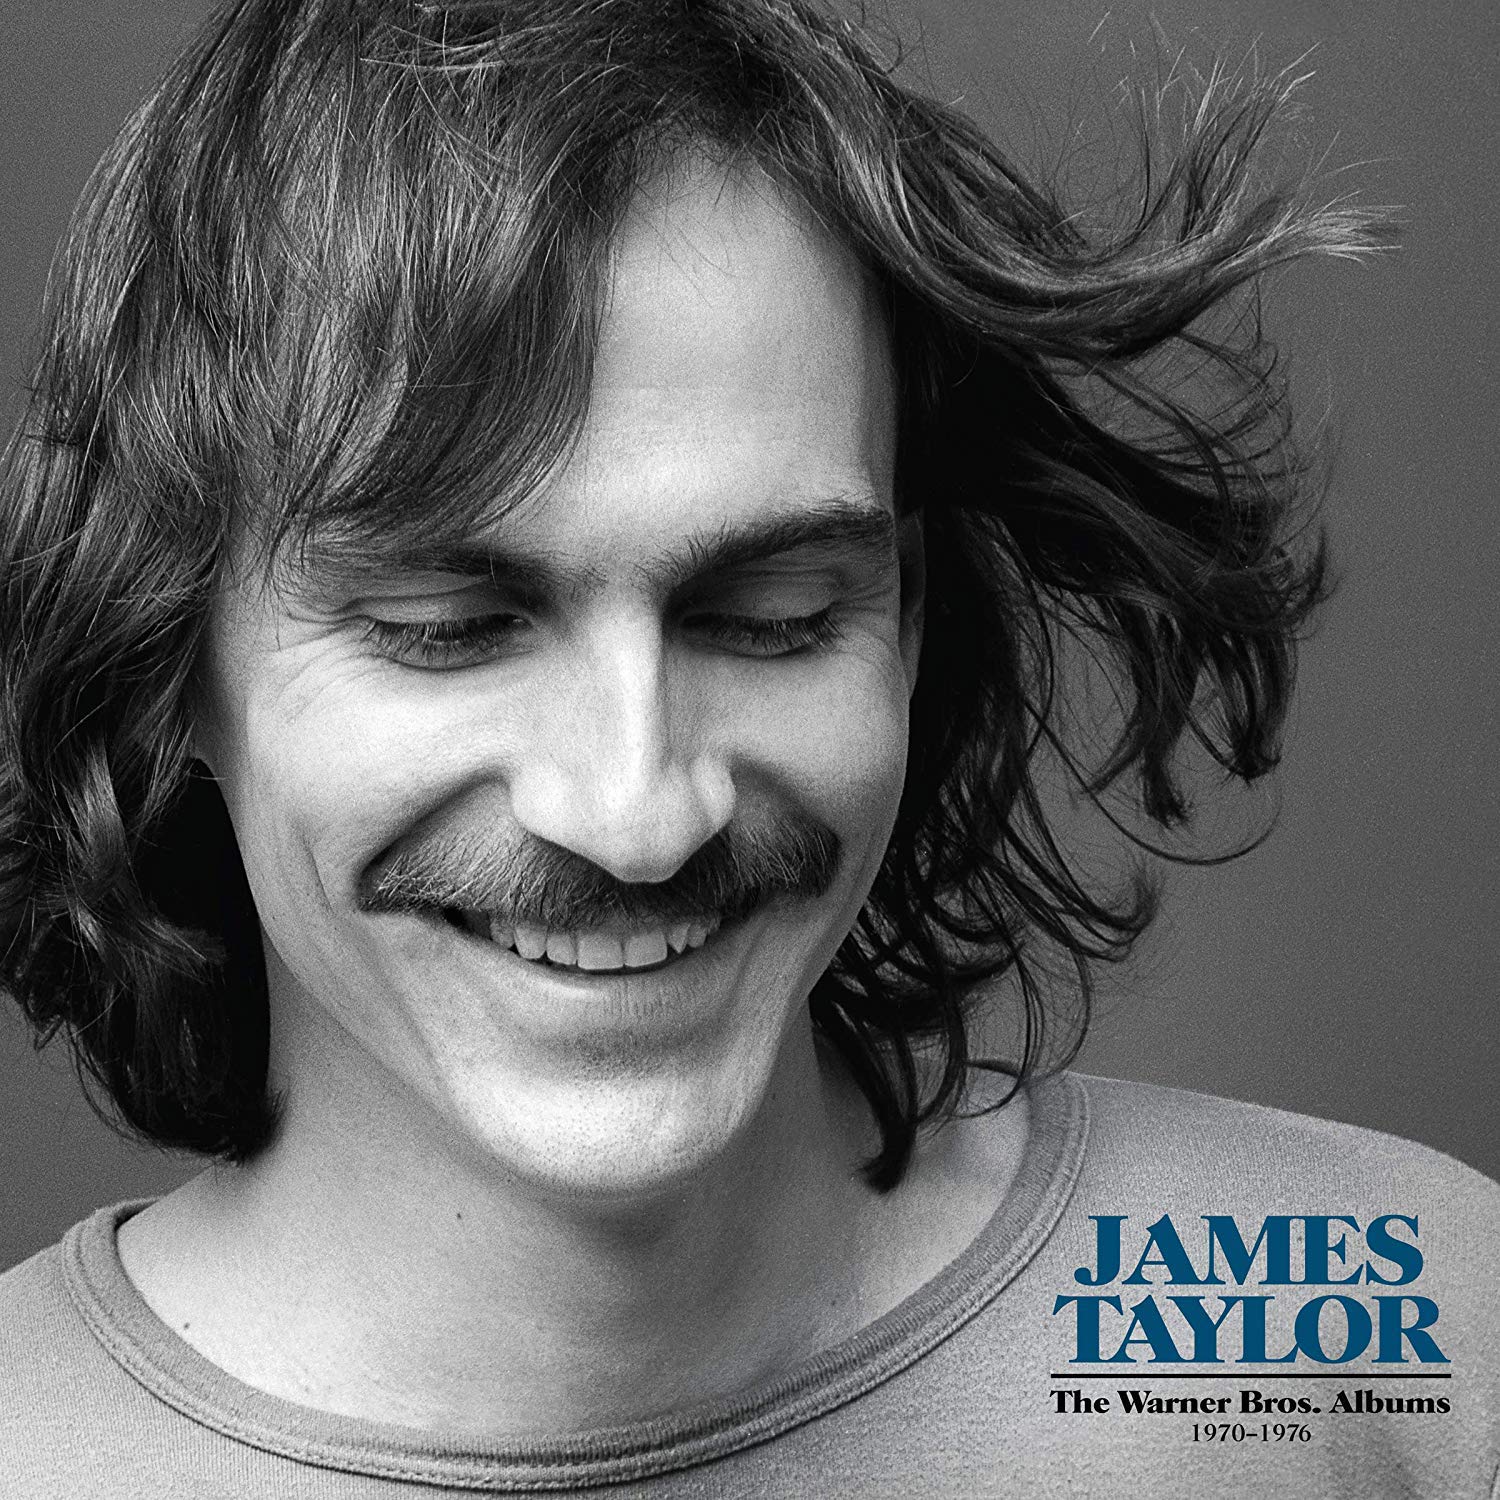 Taylor, James Warner Bros. Albums 1970-1976